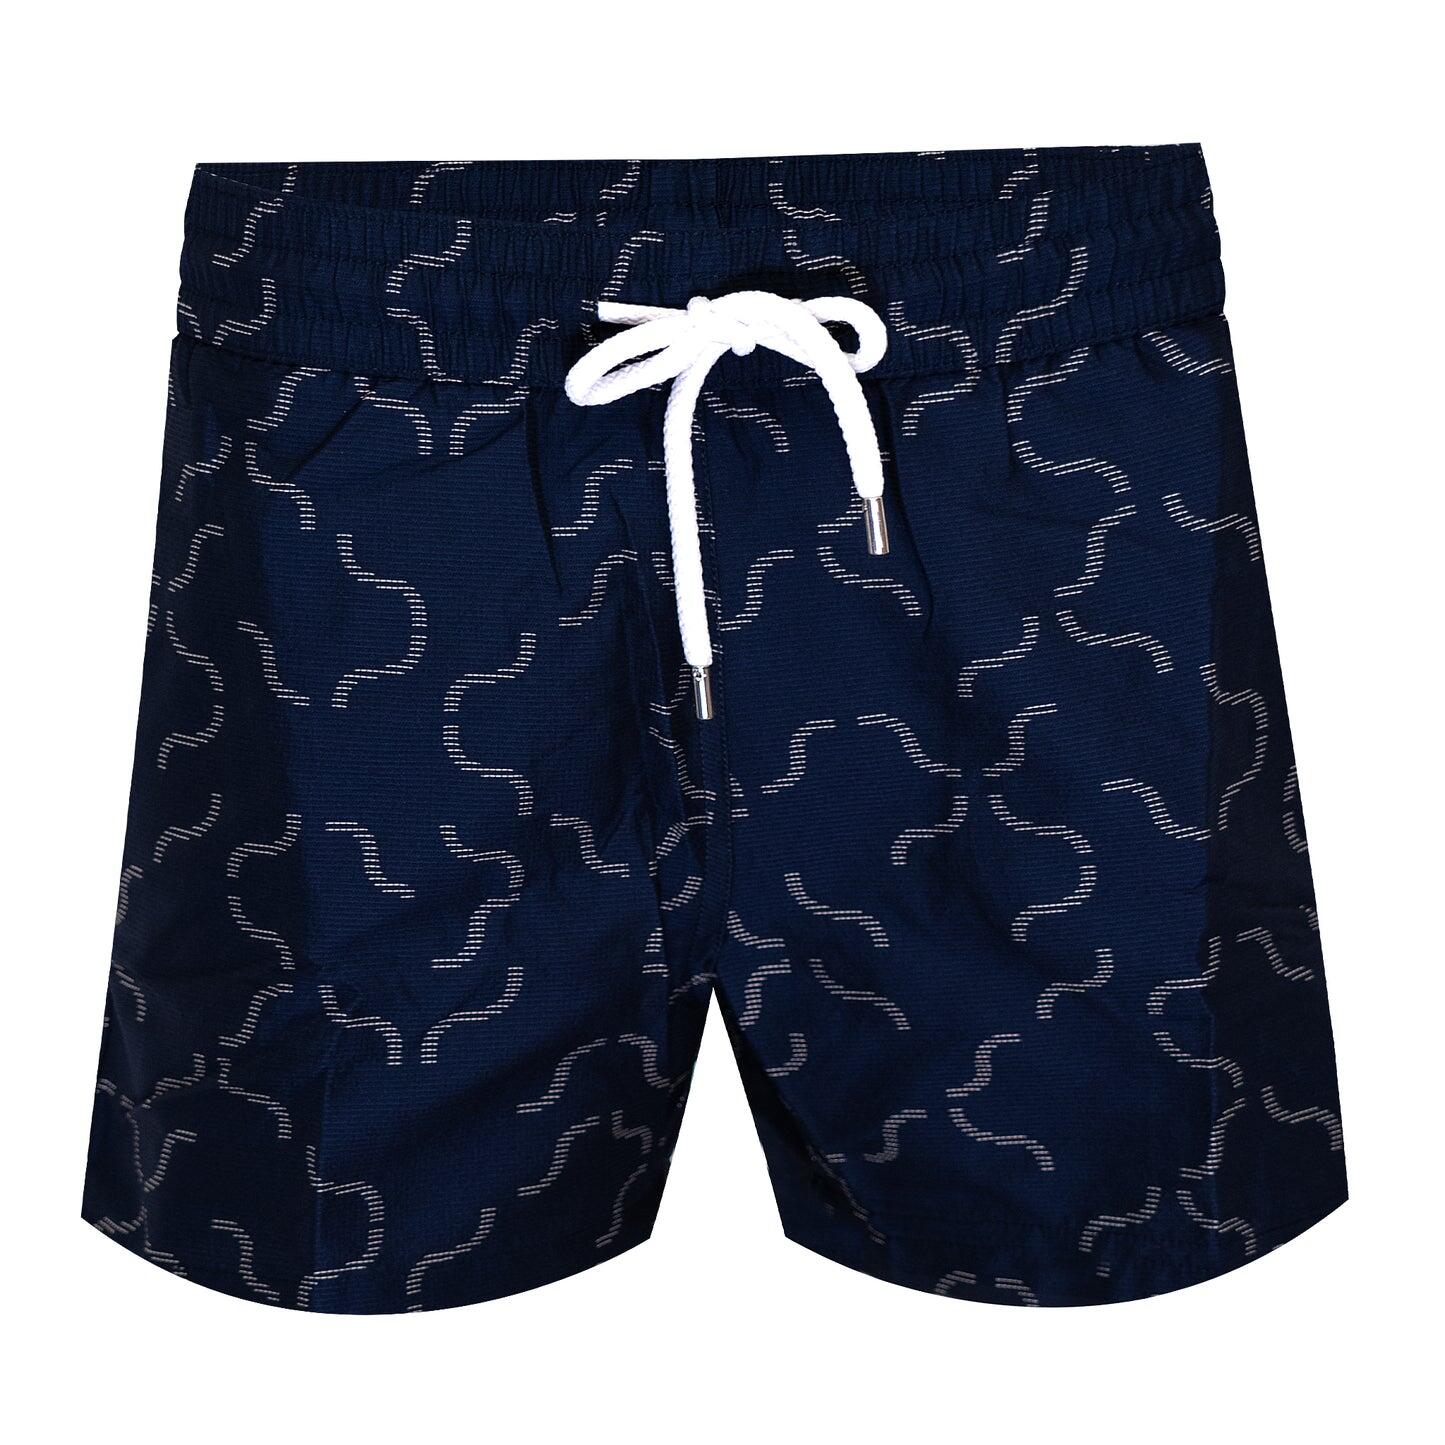 Men’s Designer Swim Shorts with Linear Print